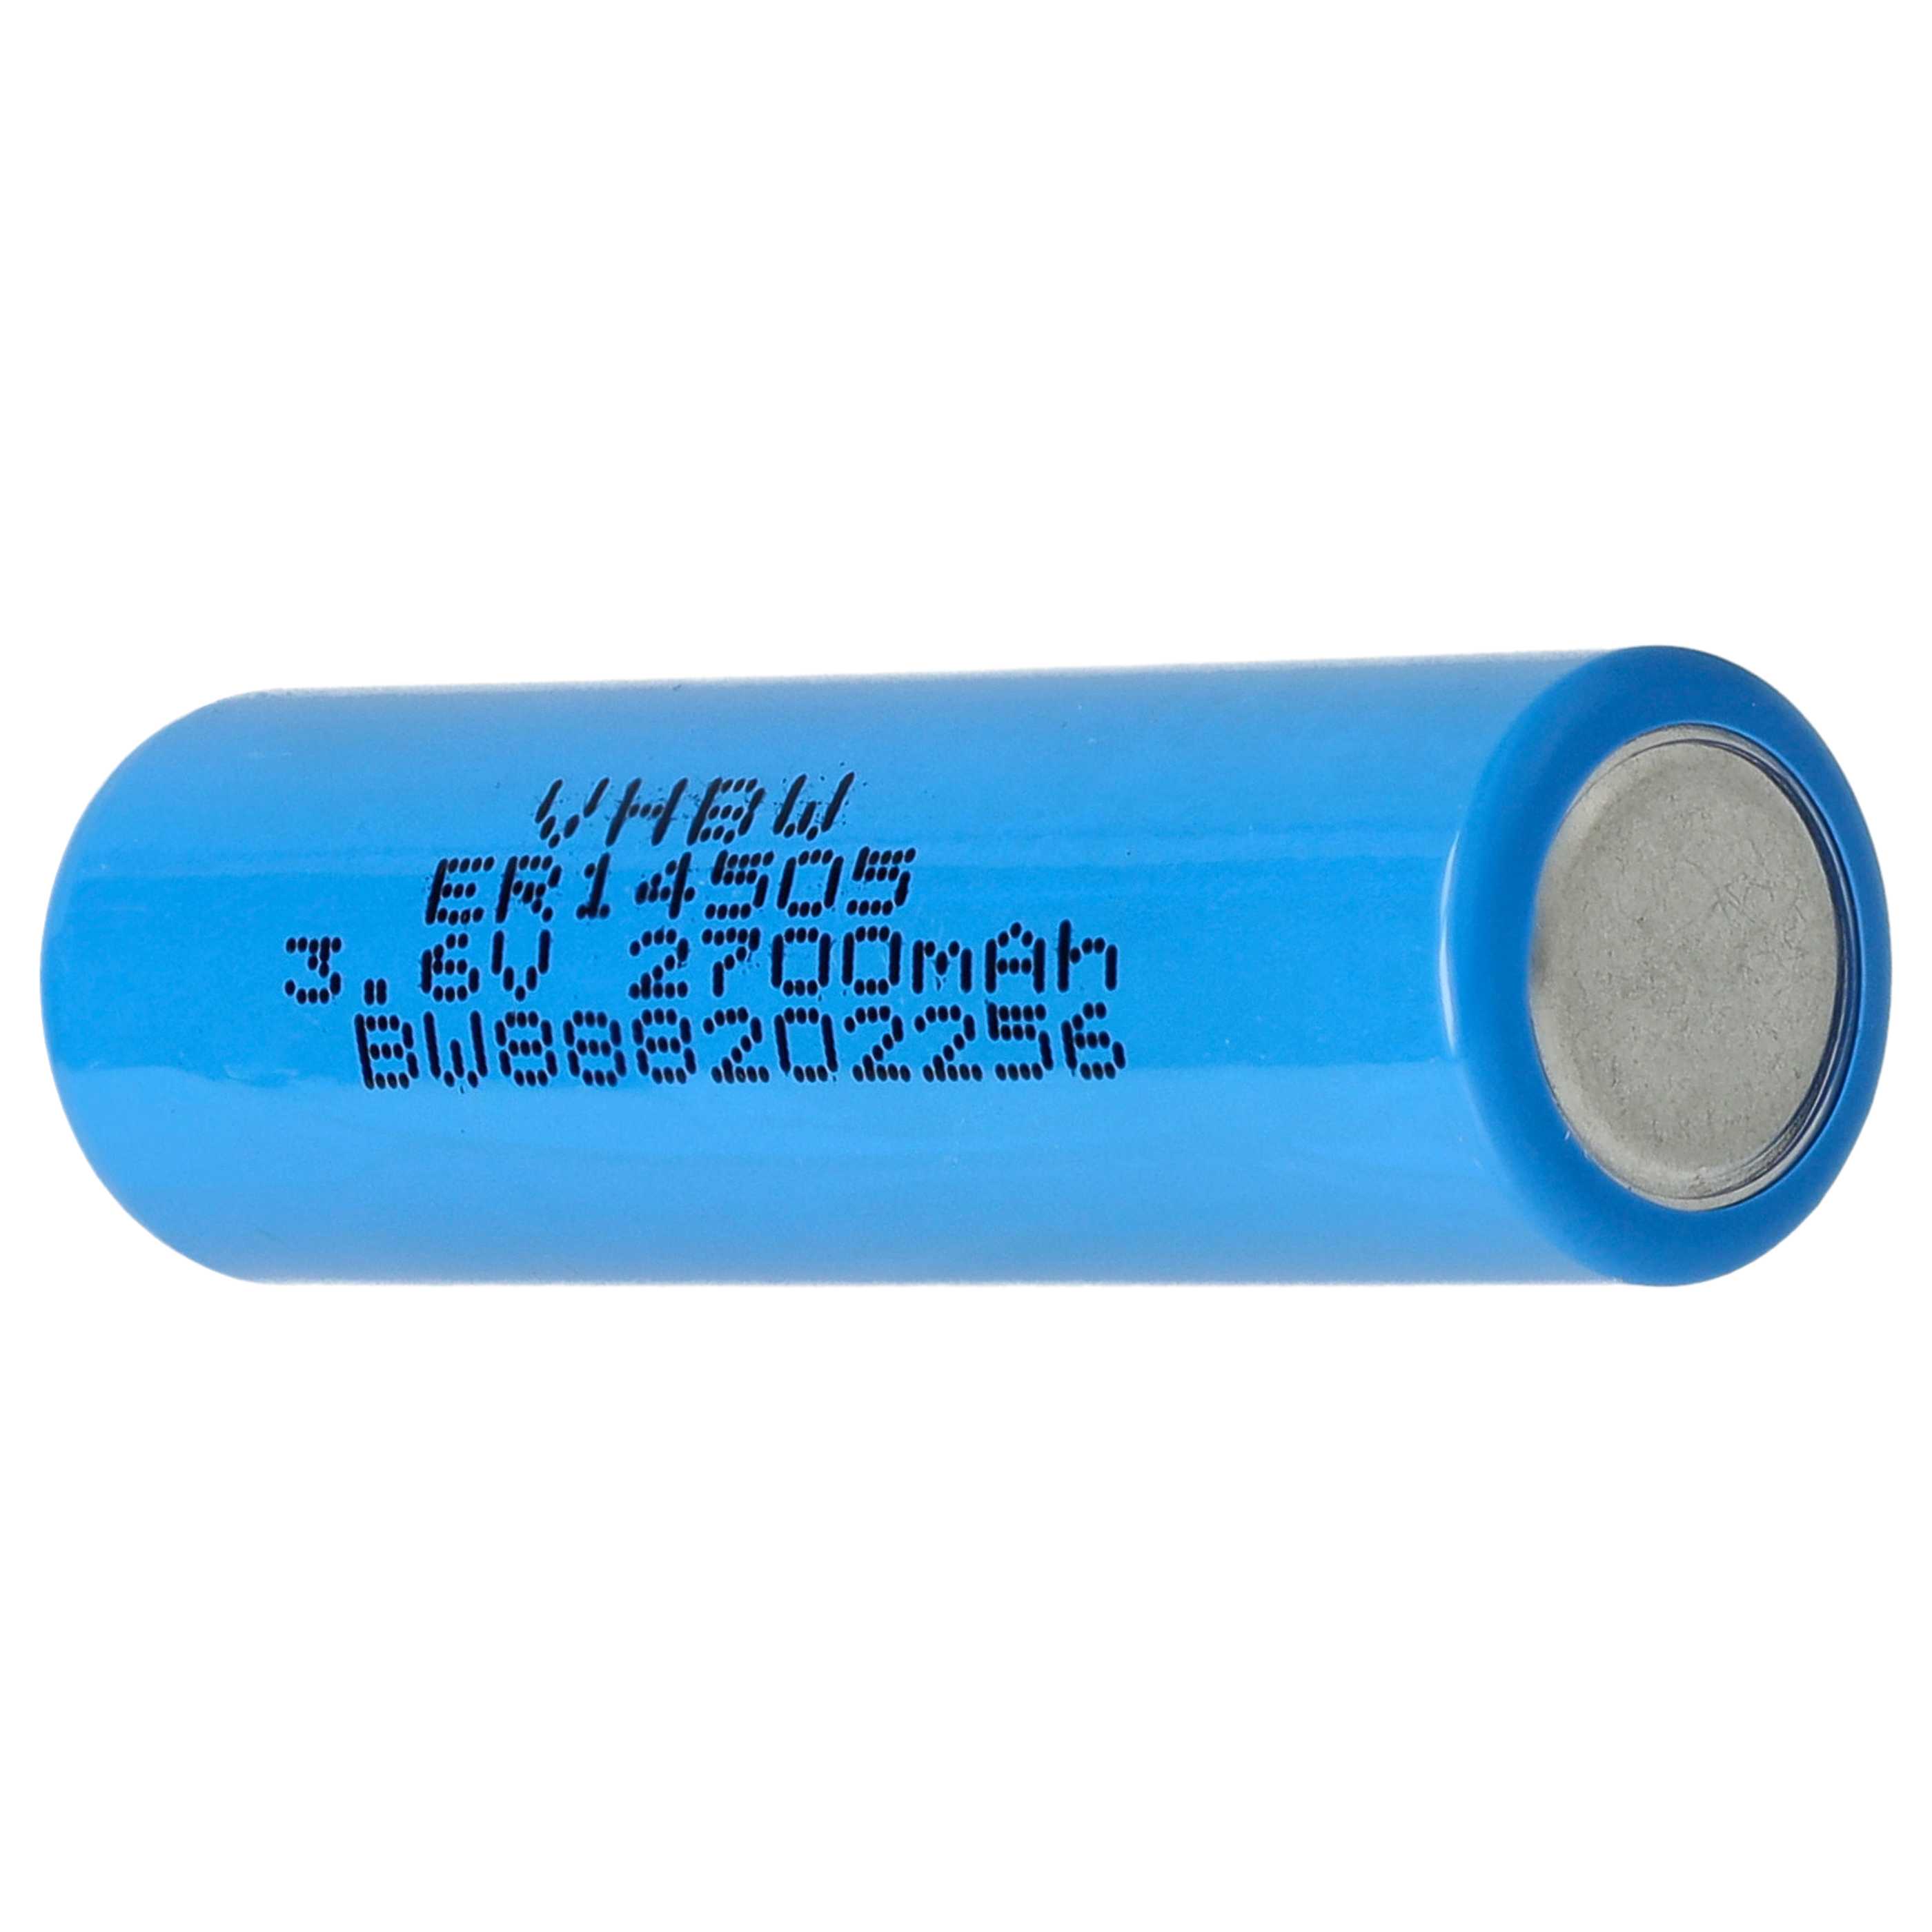 Batería para ER14250 especial Viessmann Trimatik, Trimatik 2 - 2700 mAh 3,6 V Li-SOCl2